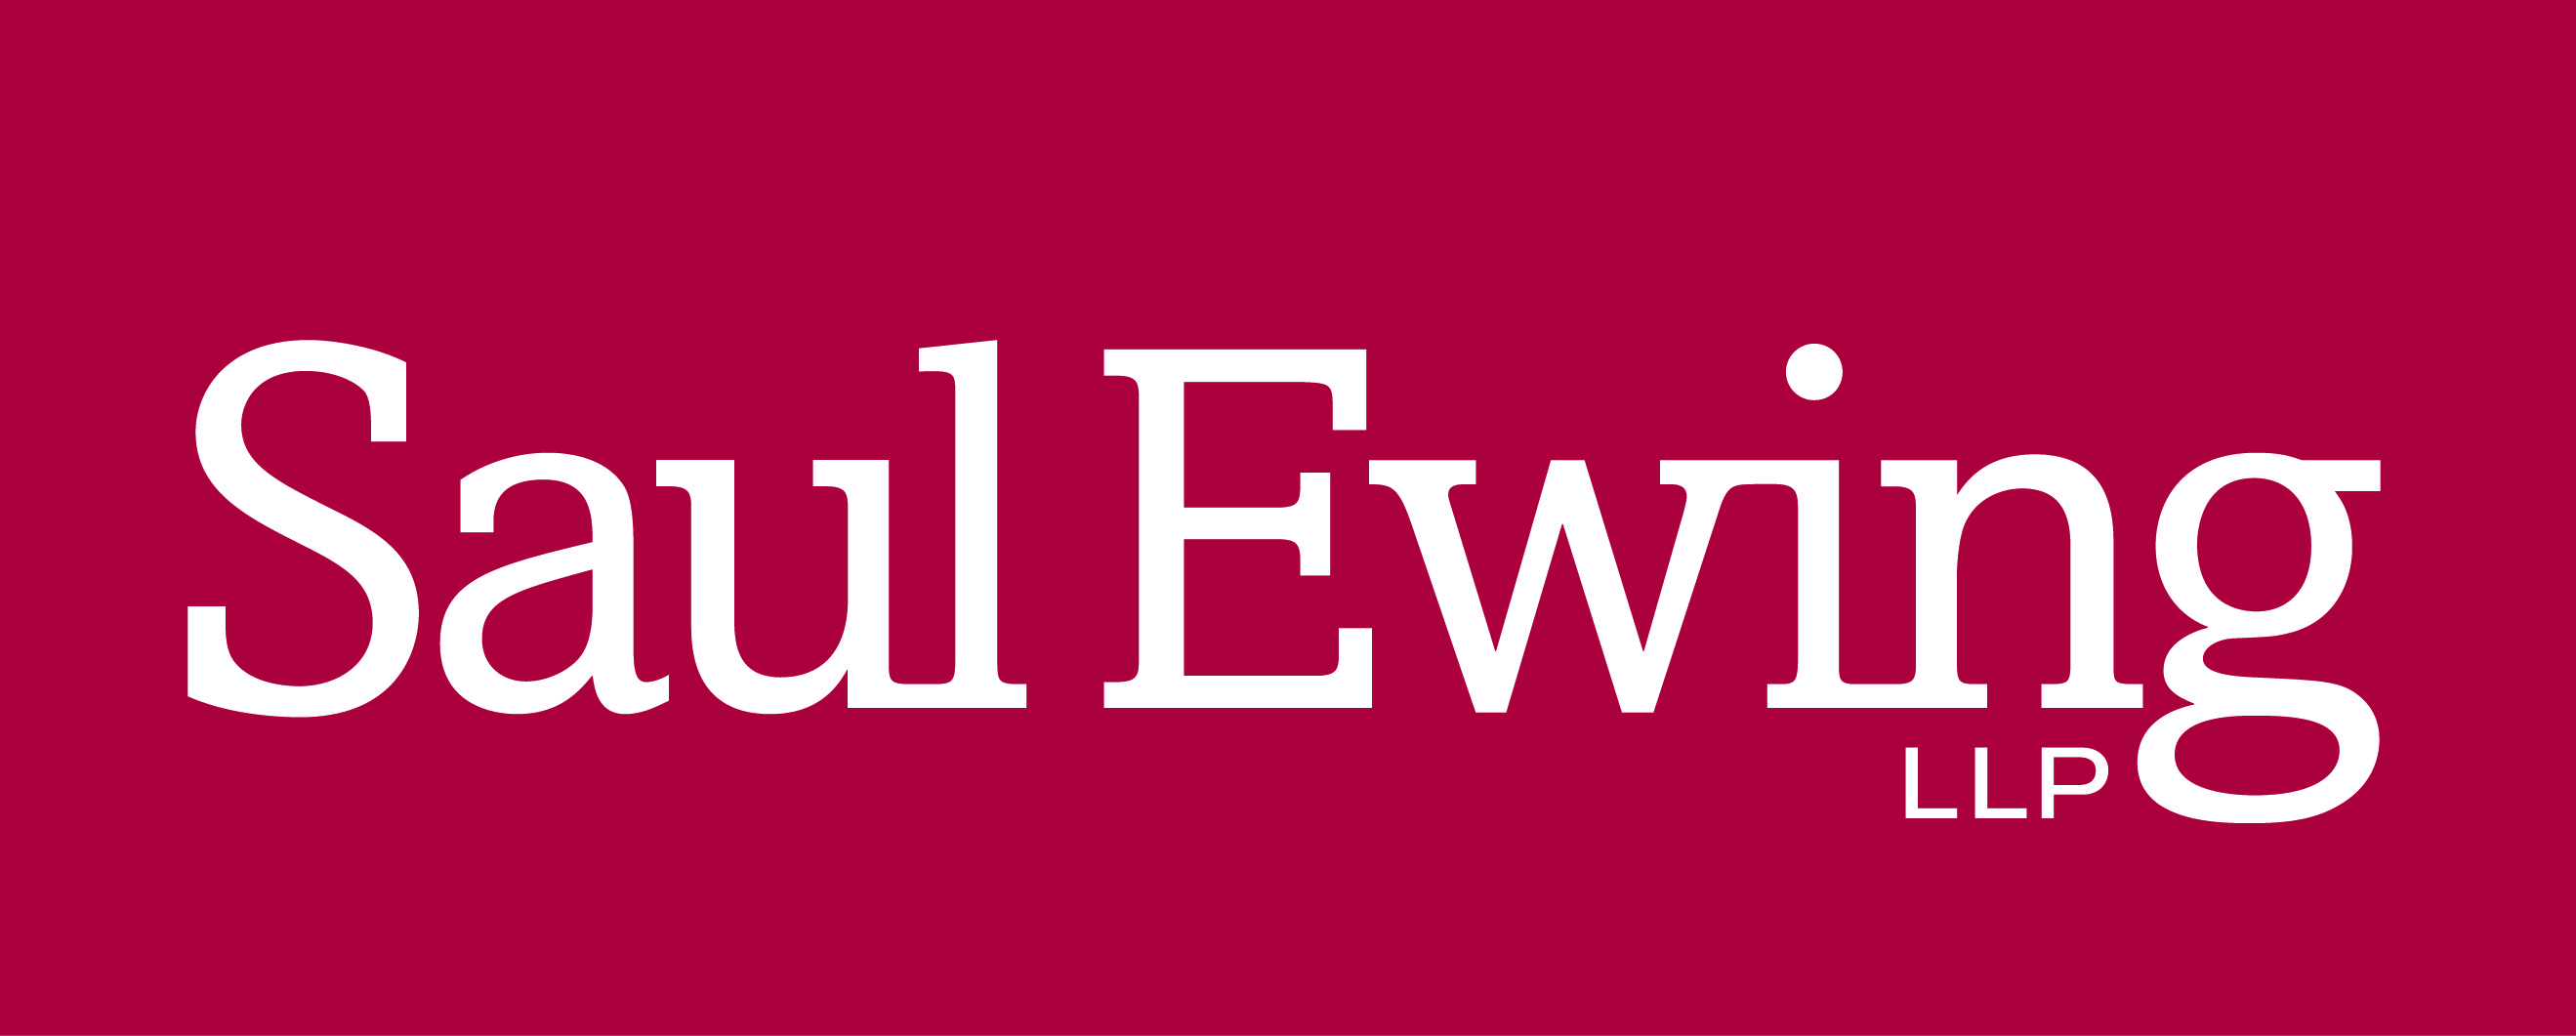 Saul Ewing LLP